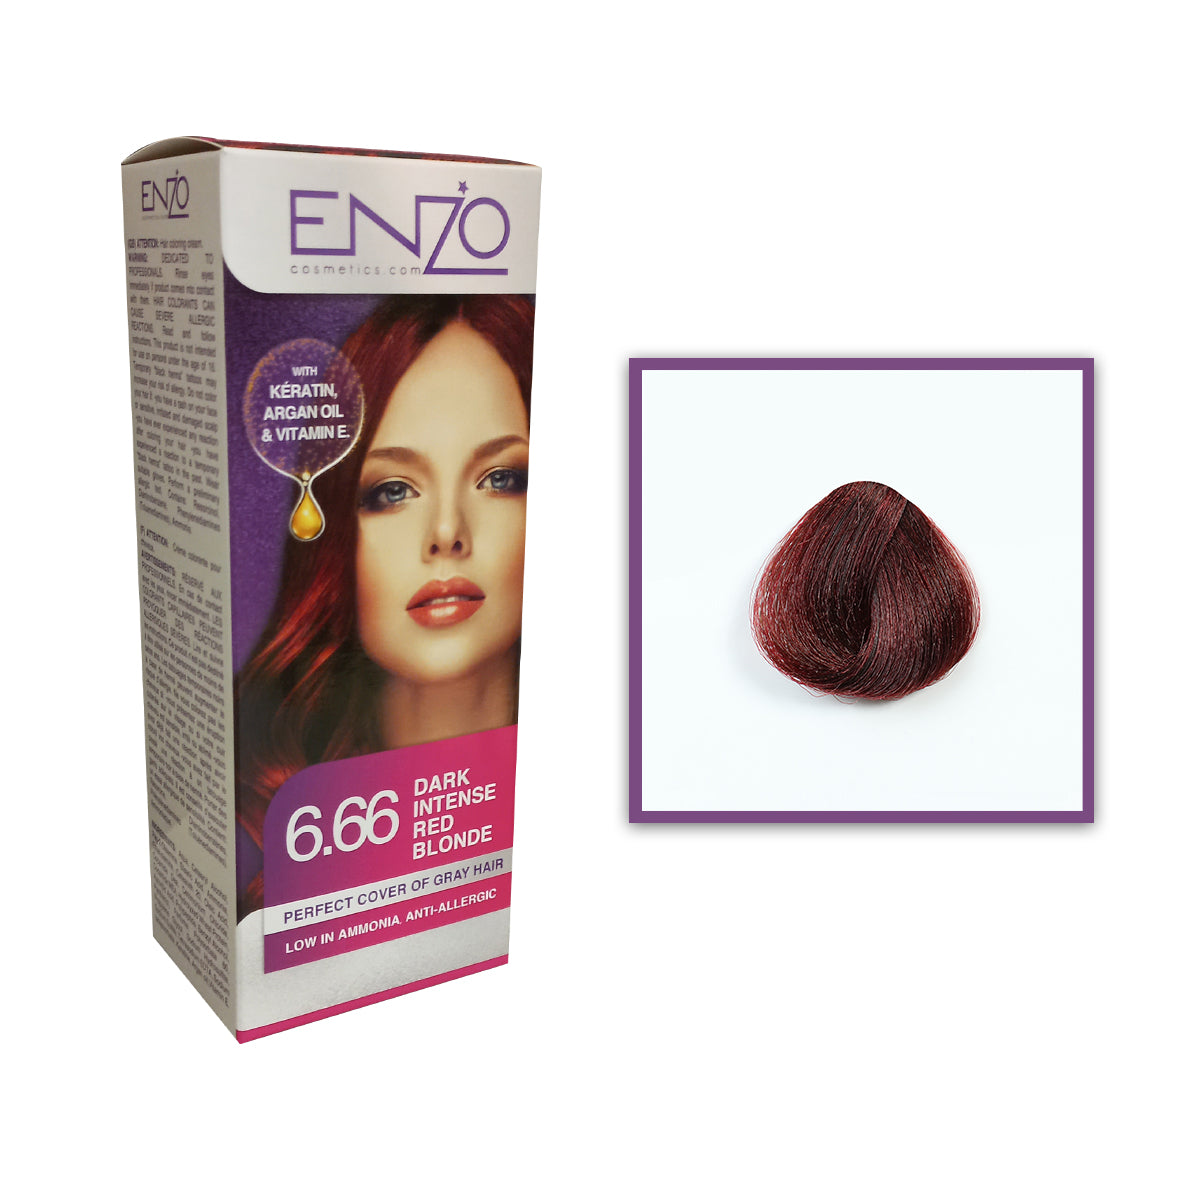 Enzo - Hair Color Women - Dark Intense Red Blonde 6.66